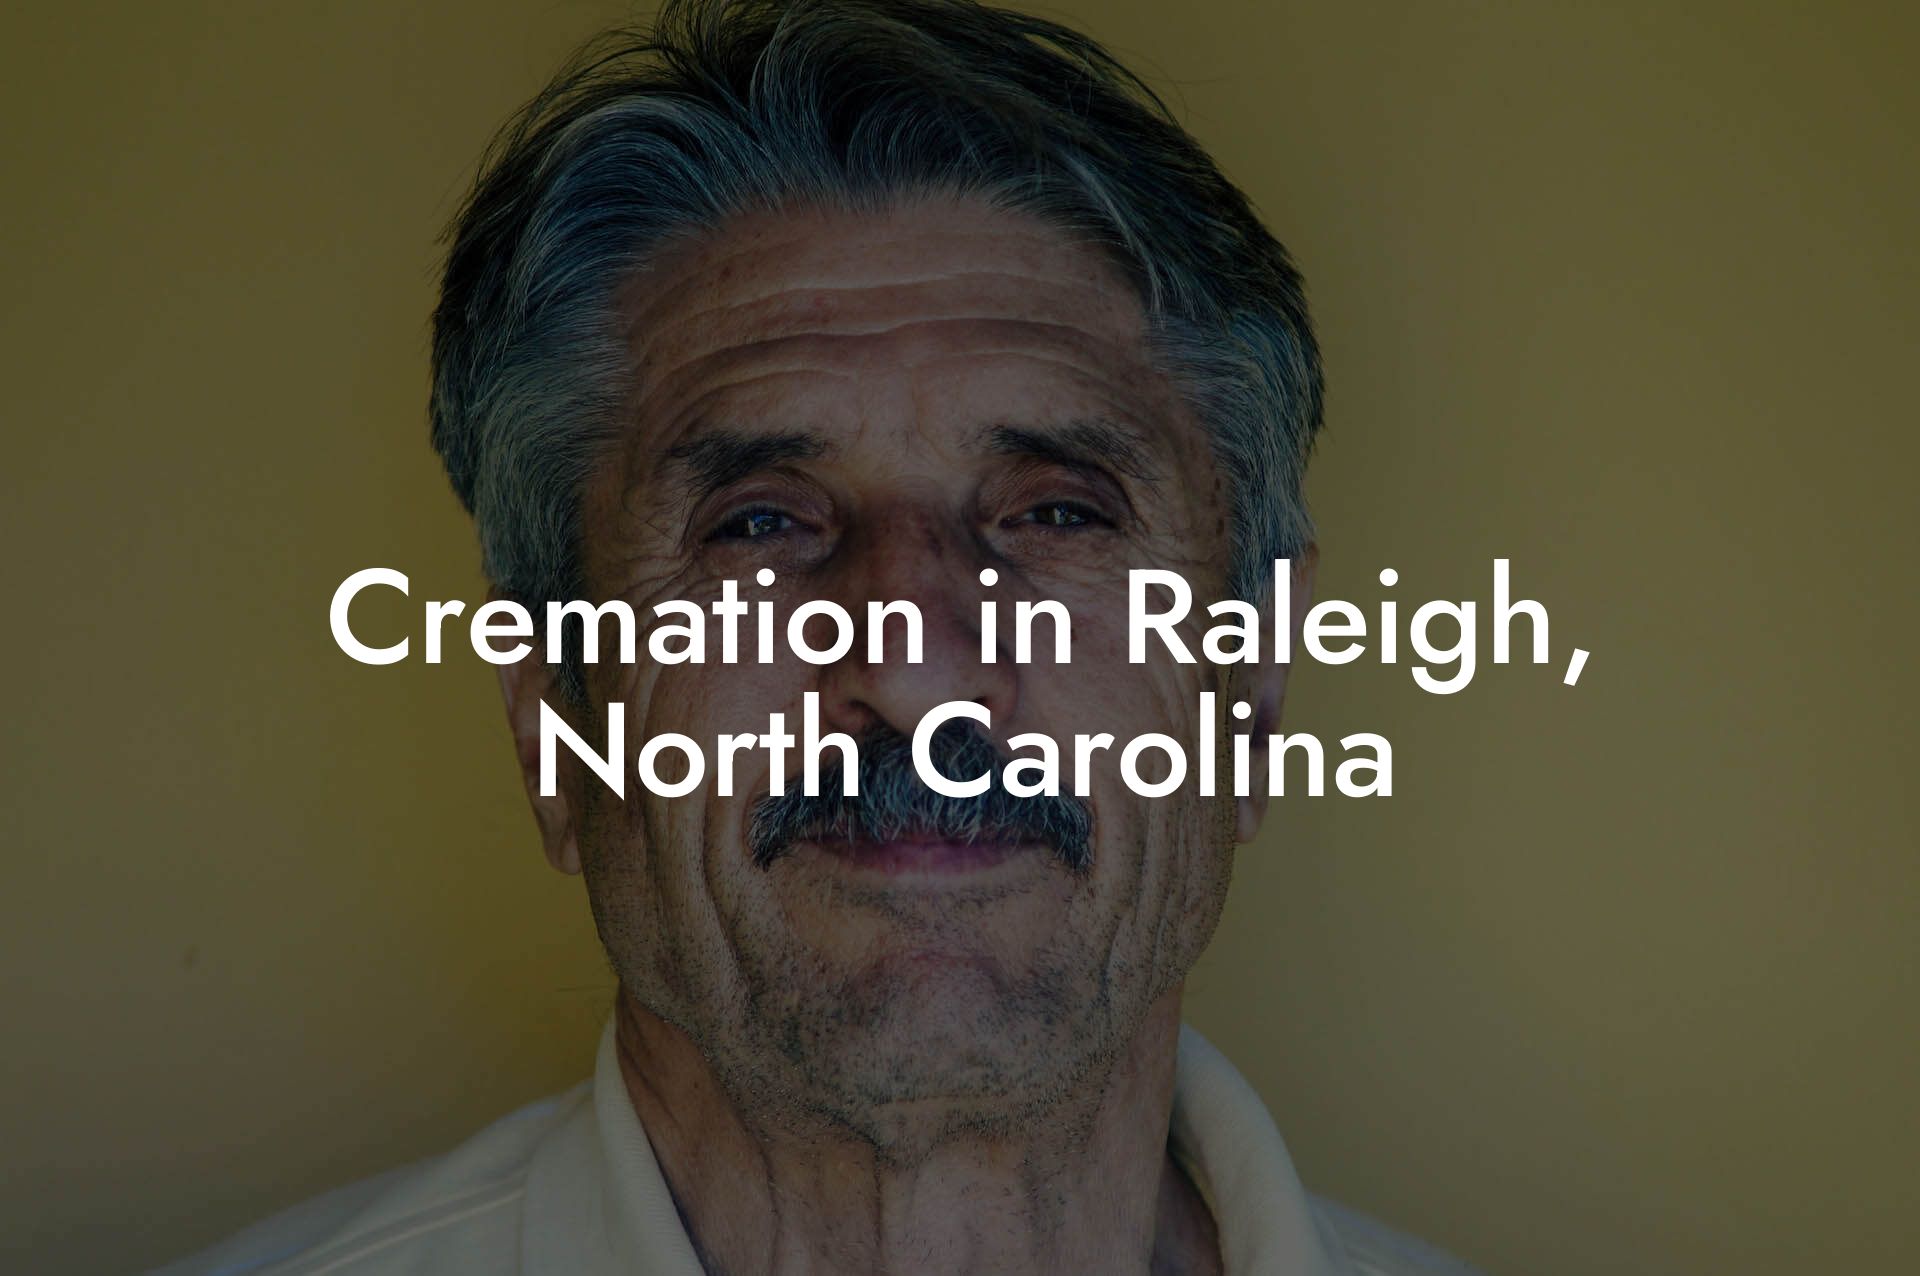 Cremation in Raleigh, North Carolina